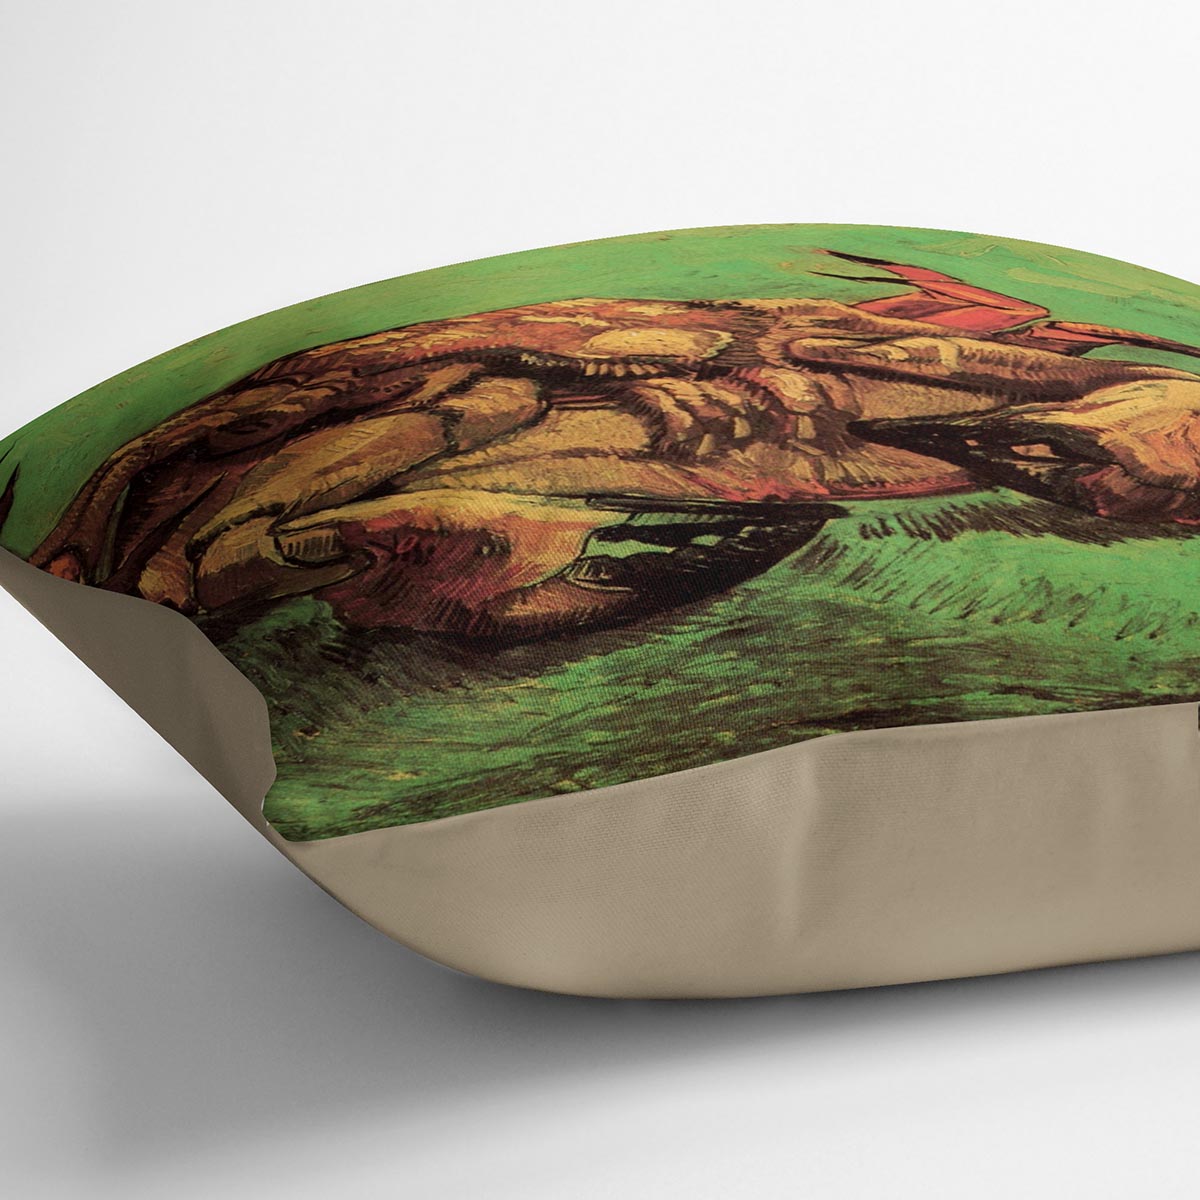 Crab on Its Back by Van Gogh Cushion